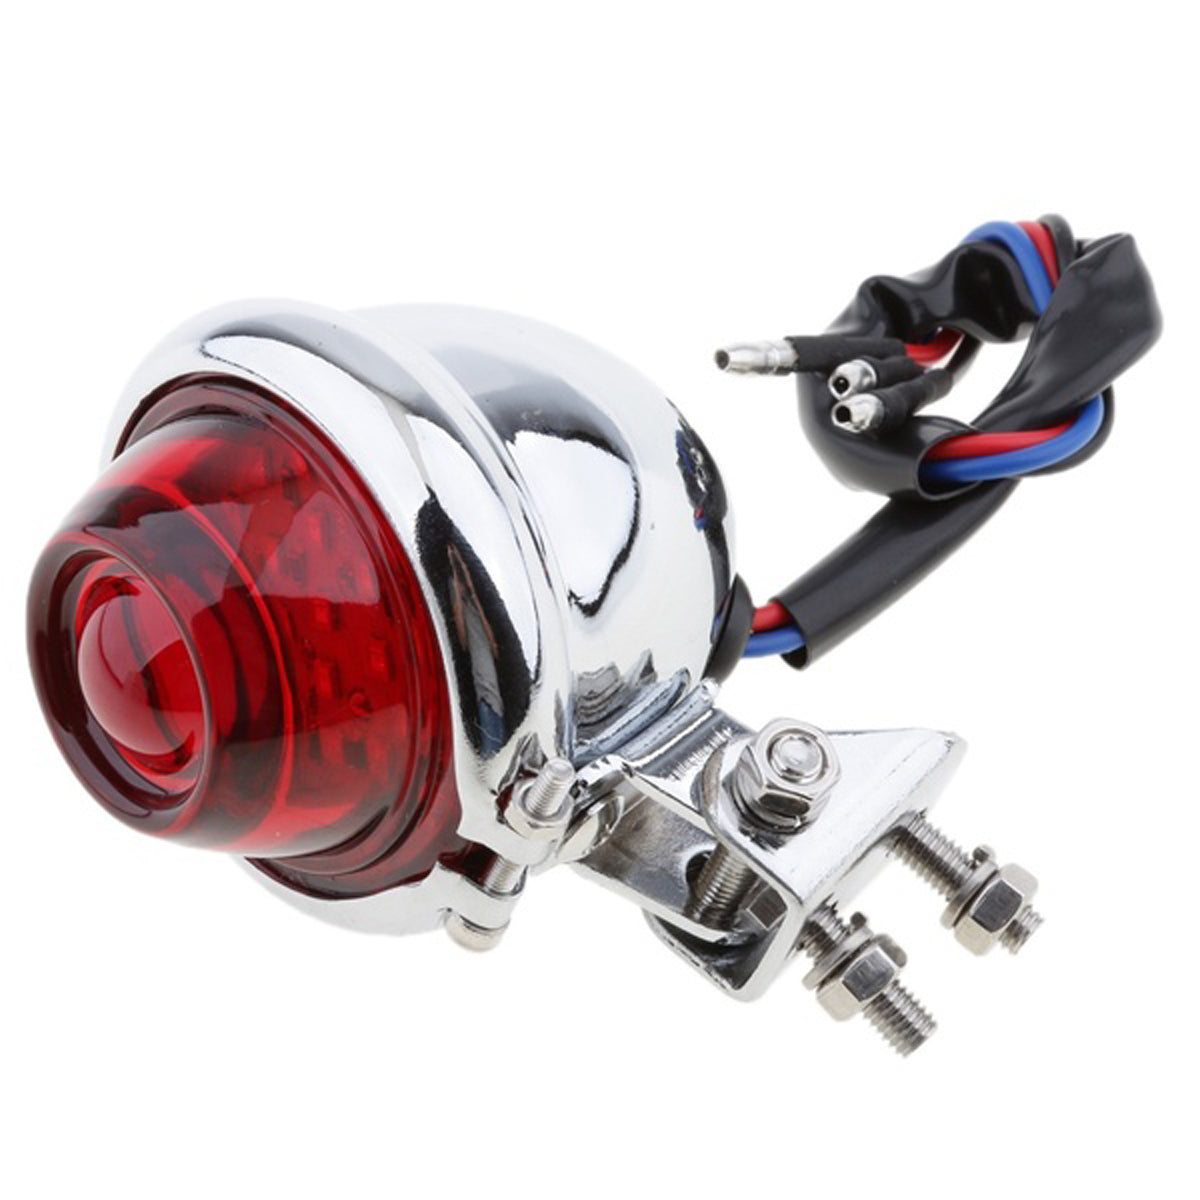 Dark Red 12V DC Motorcycle Rear Tail Light LED Brake Taillight Stop Light Lamp For Harley